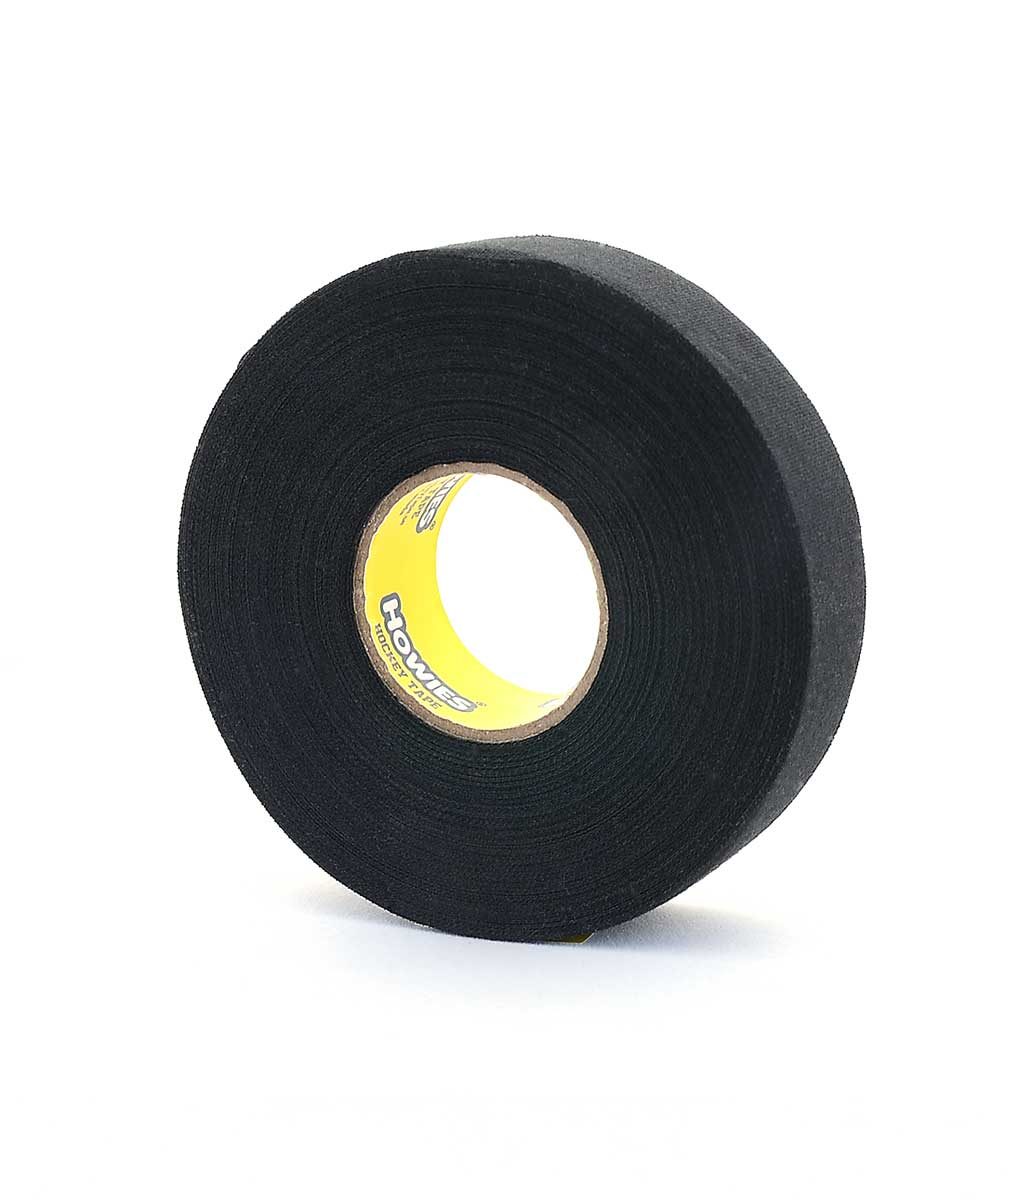 Howies Black Cloth Hockey Tape